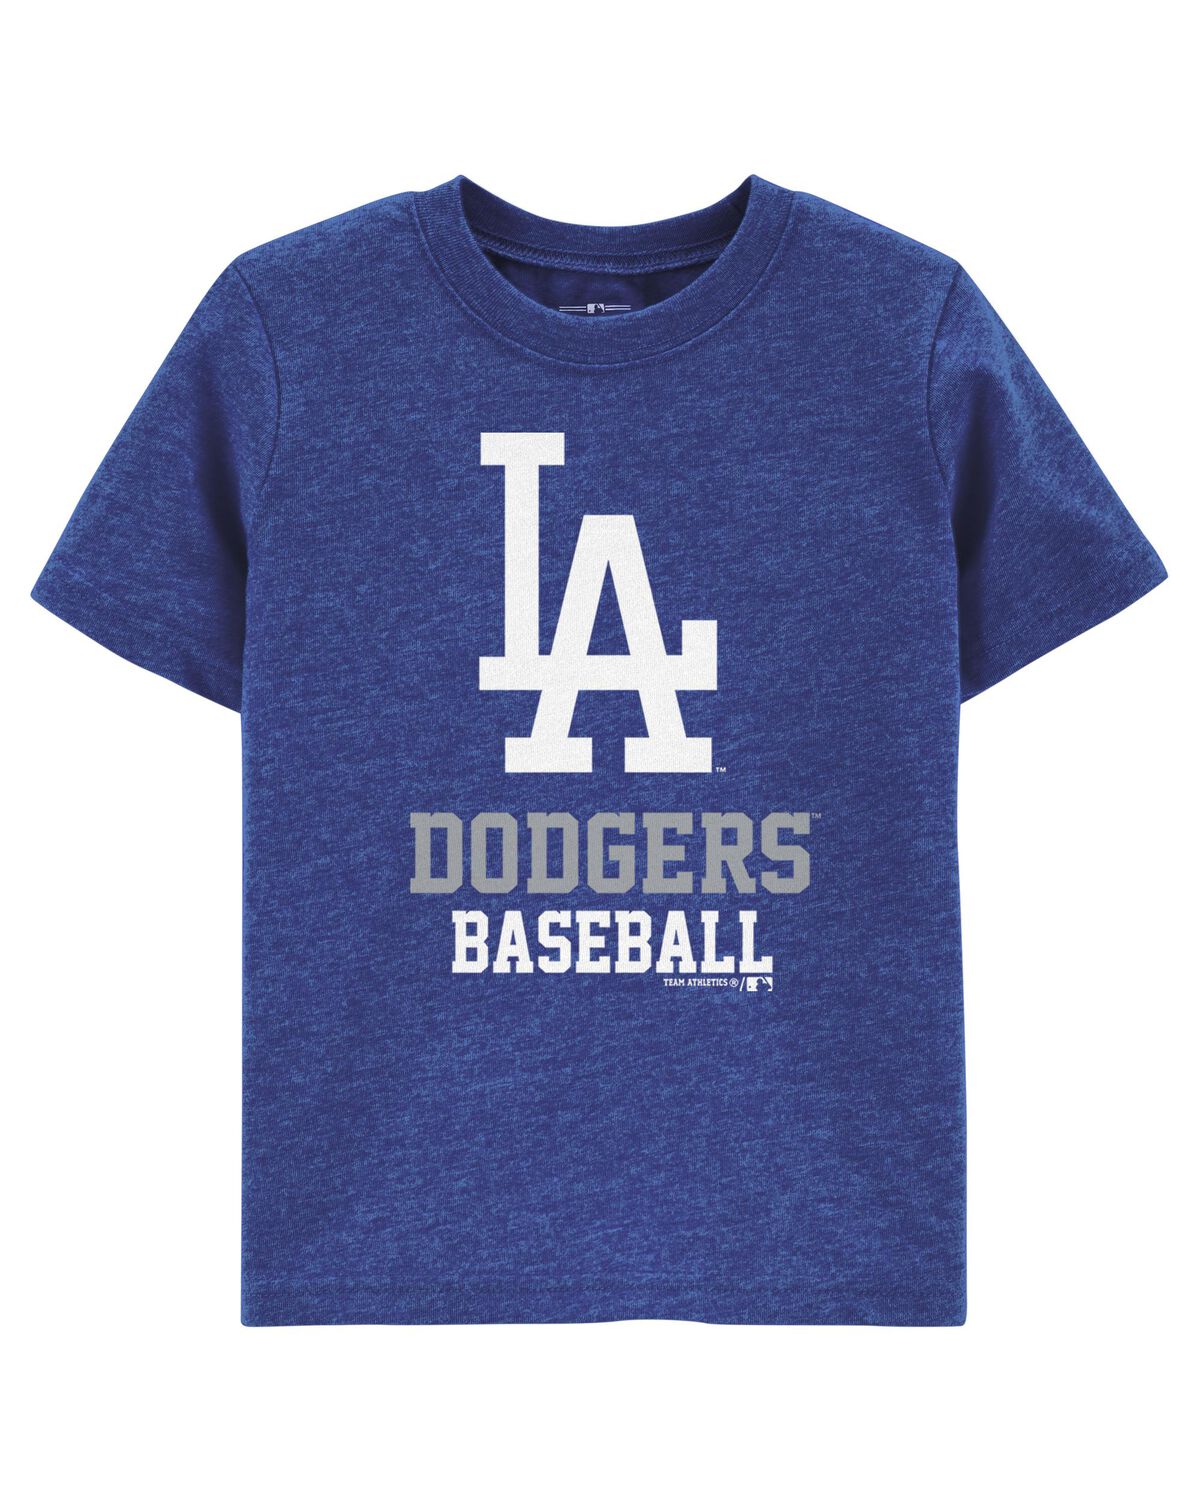 Dodgers Toddler MLB Los Angeles Dodgers Tee | carters.com